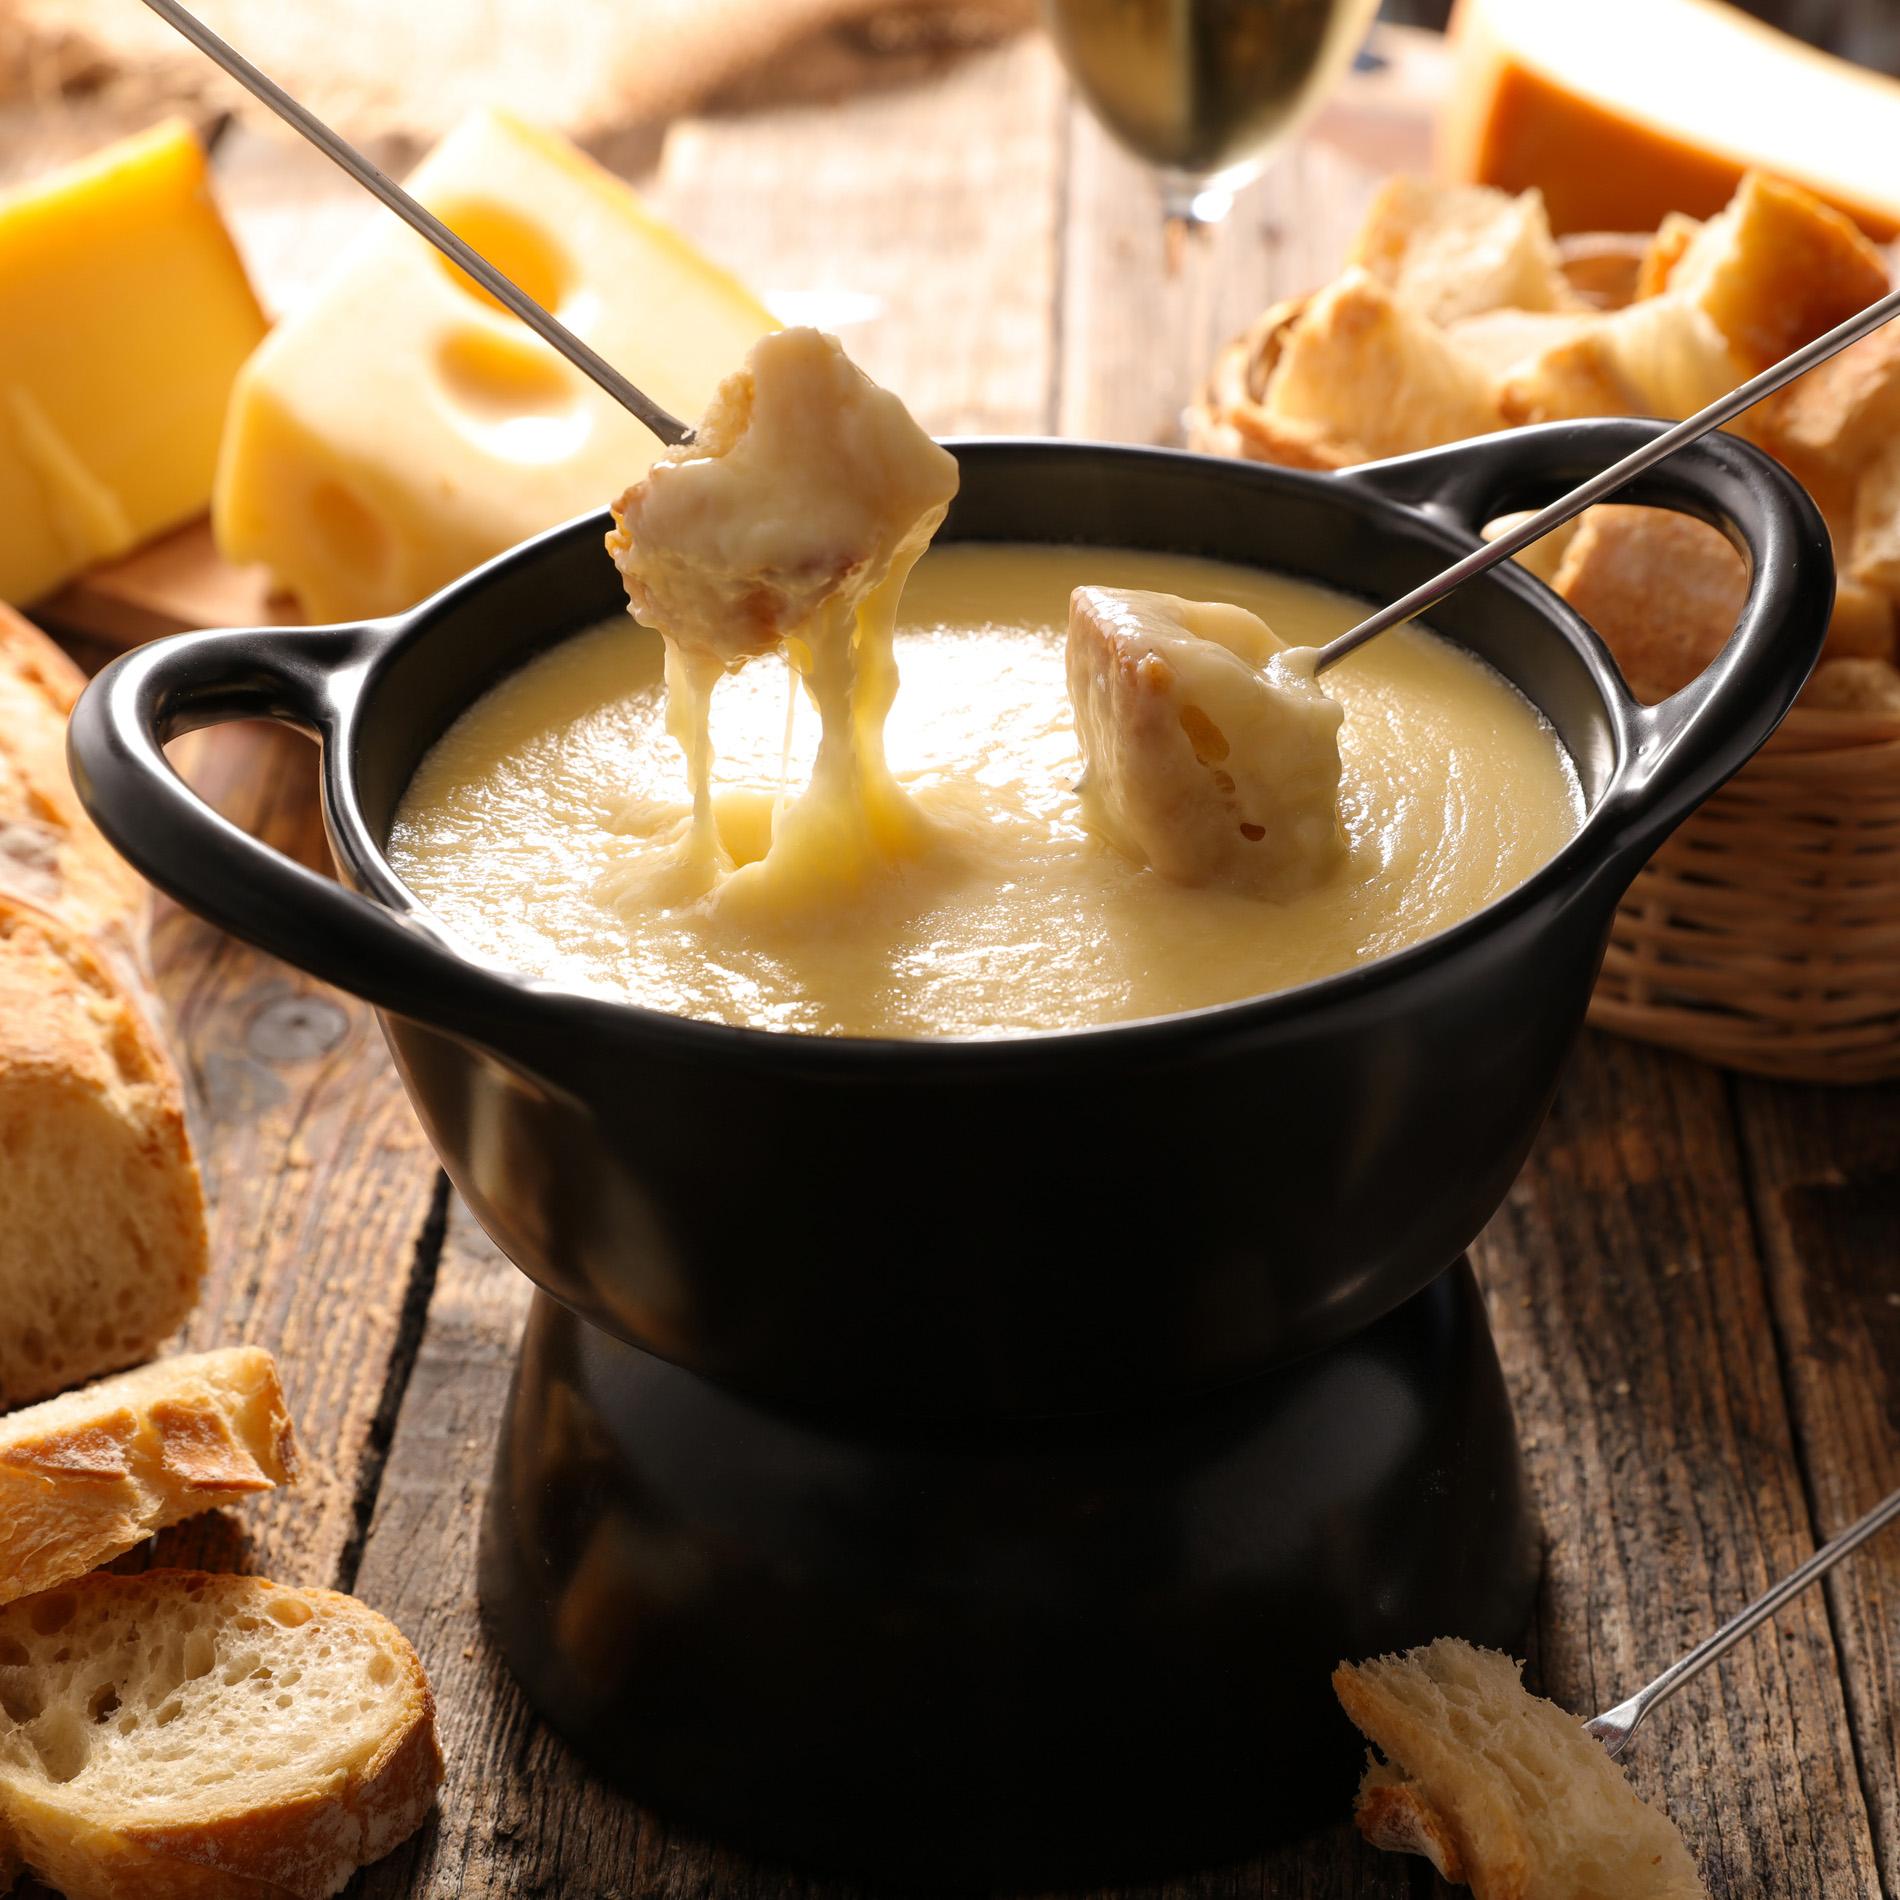 Recette fondue au gruyère et au vacherin - Cuisine / Madame Figaro